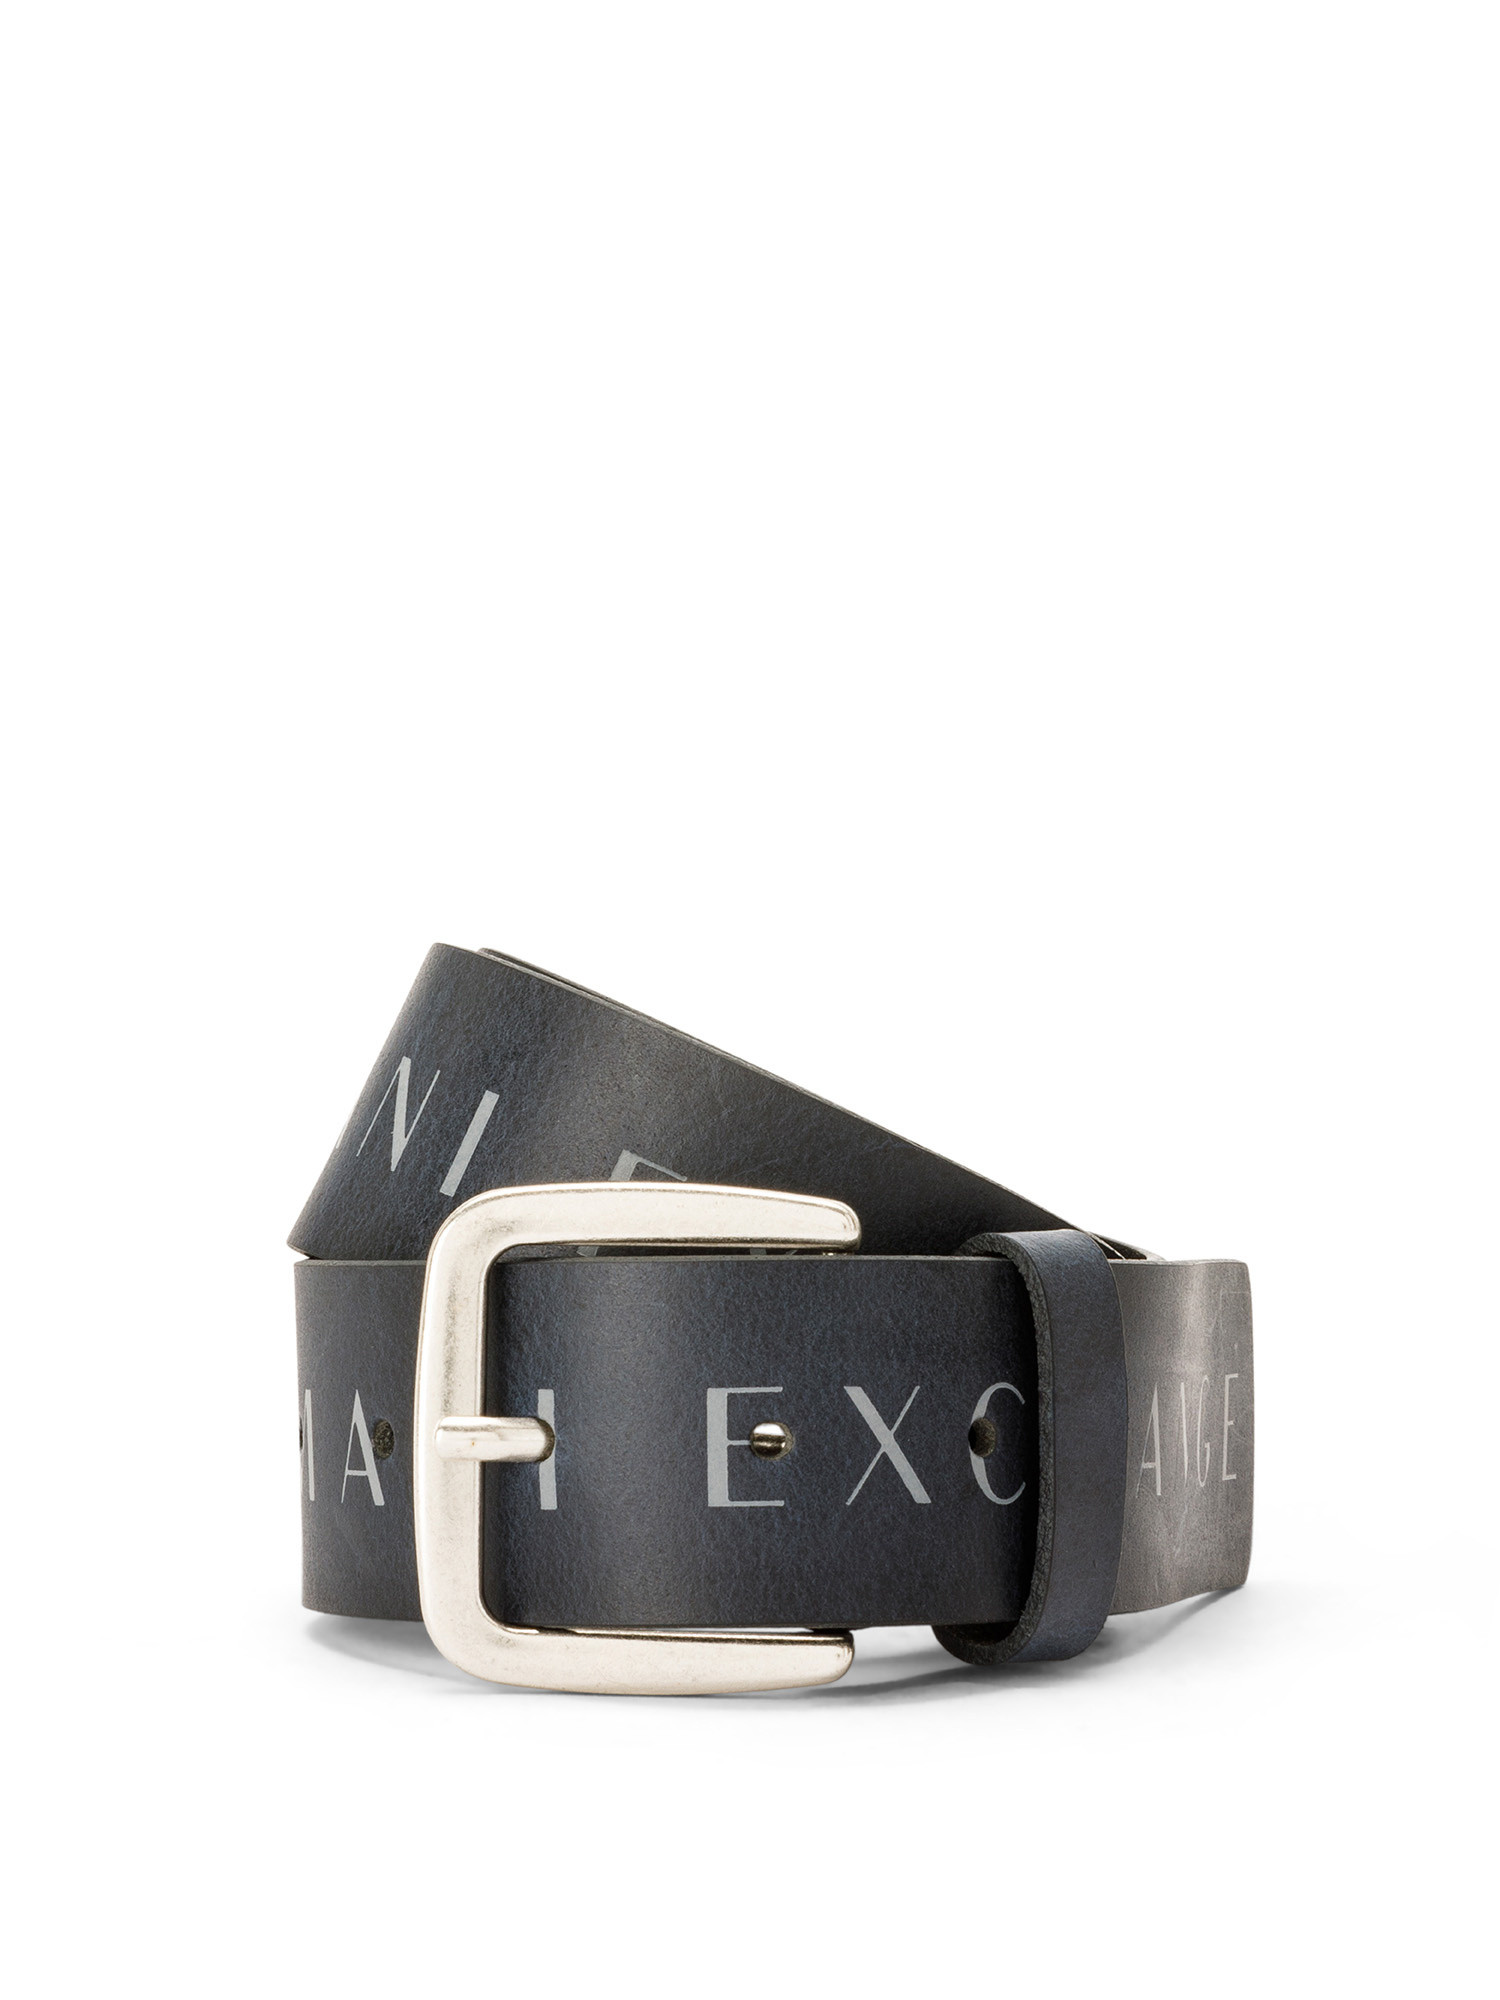 Armani Exchange - Cintura in pelle con logo stampato, Blu scuro, large image number 0